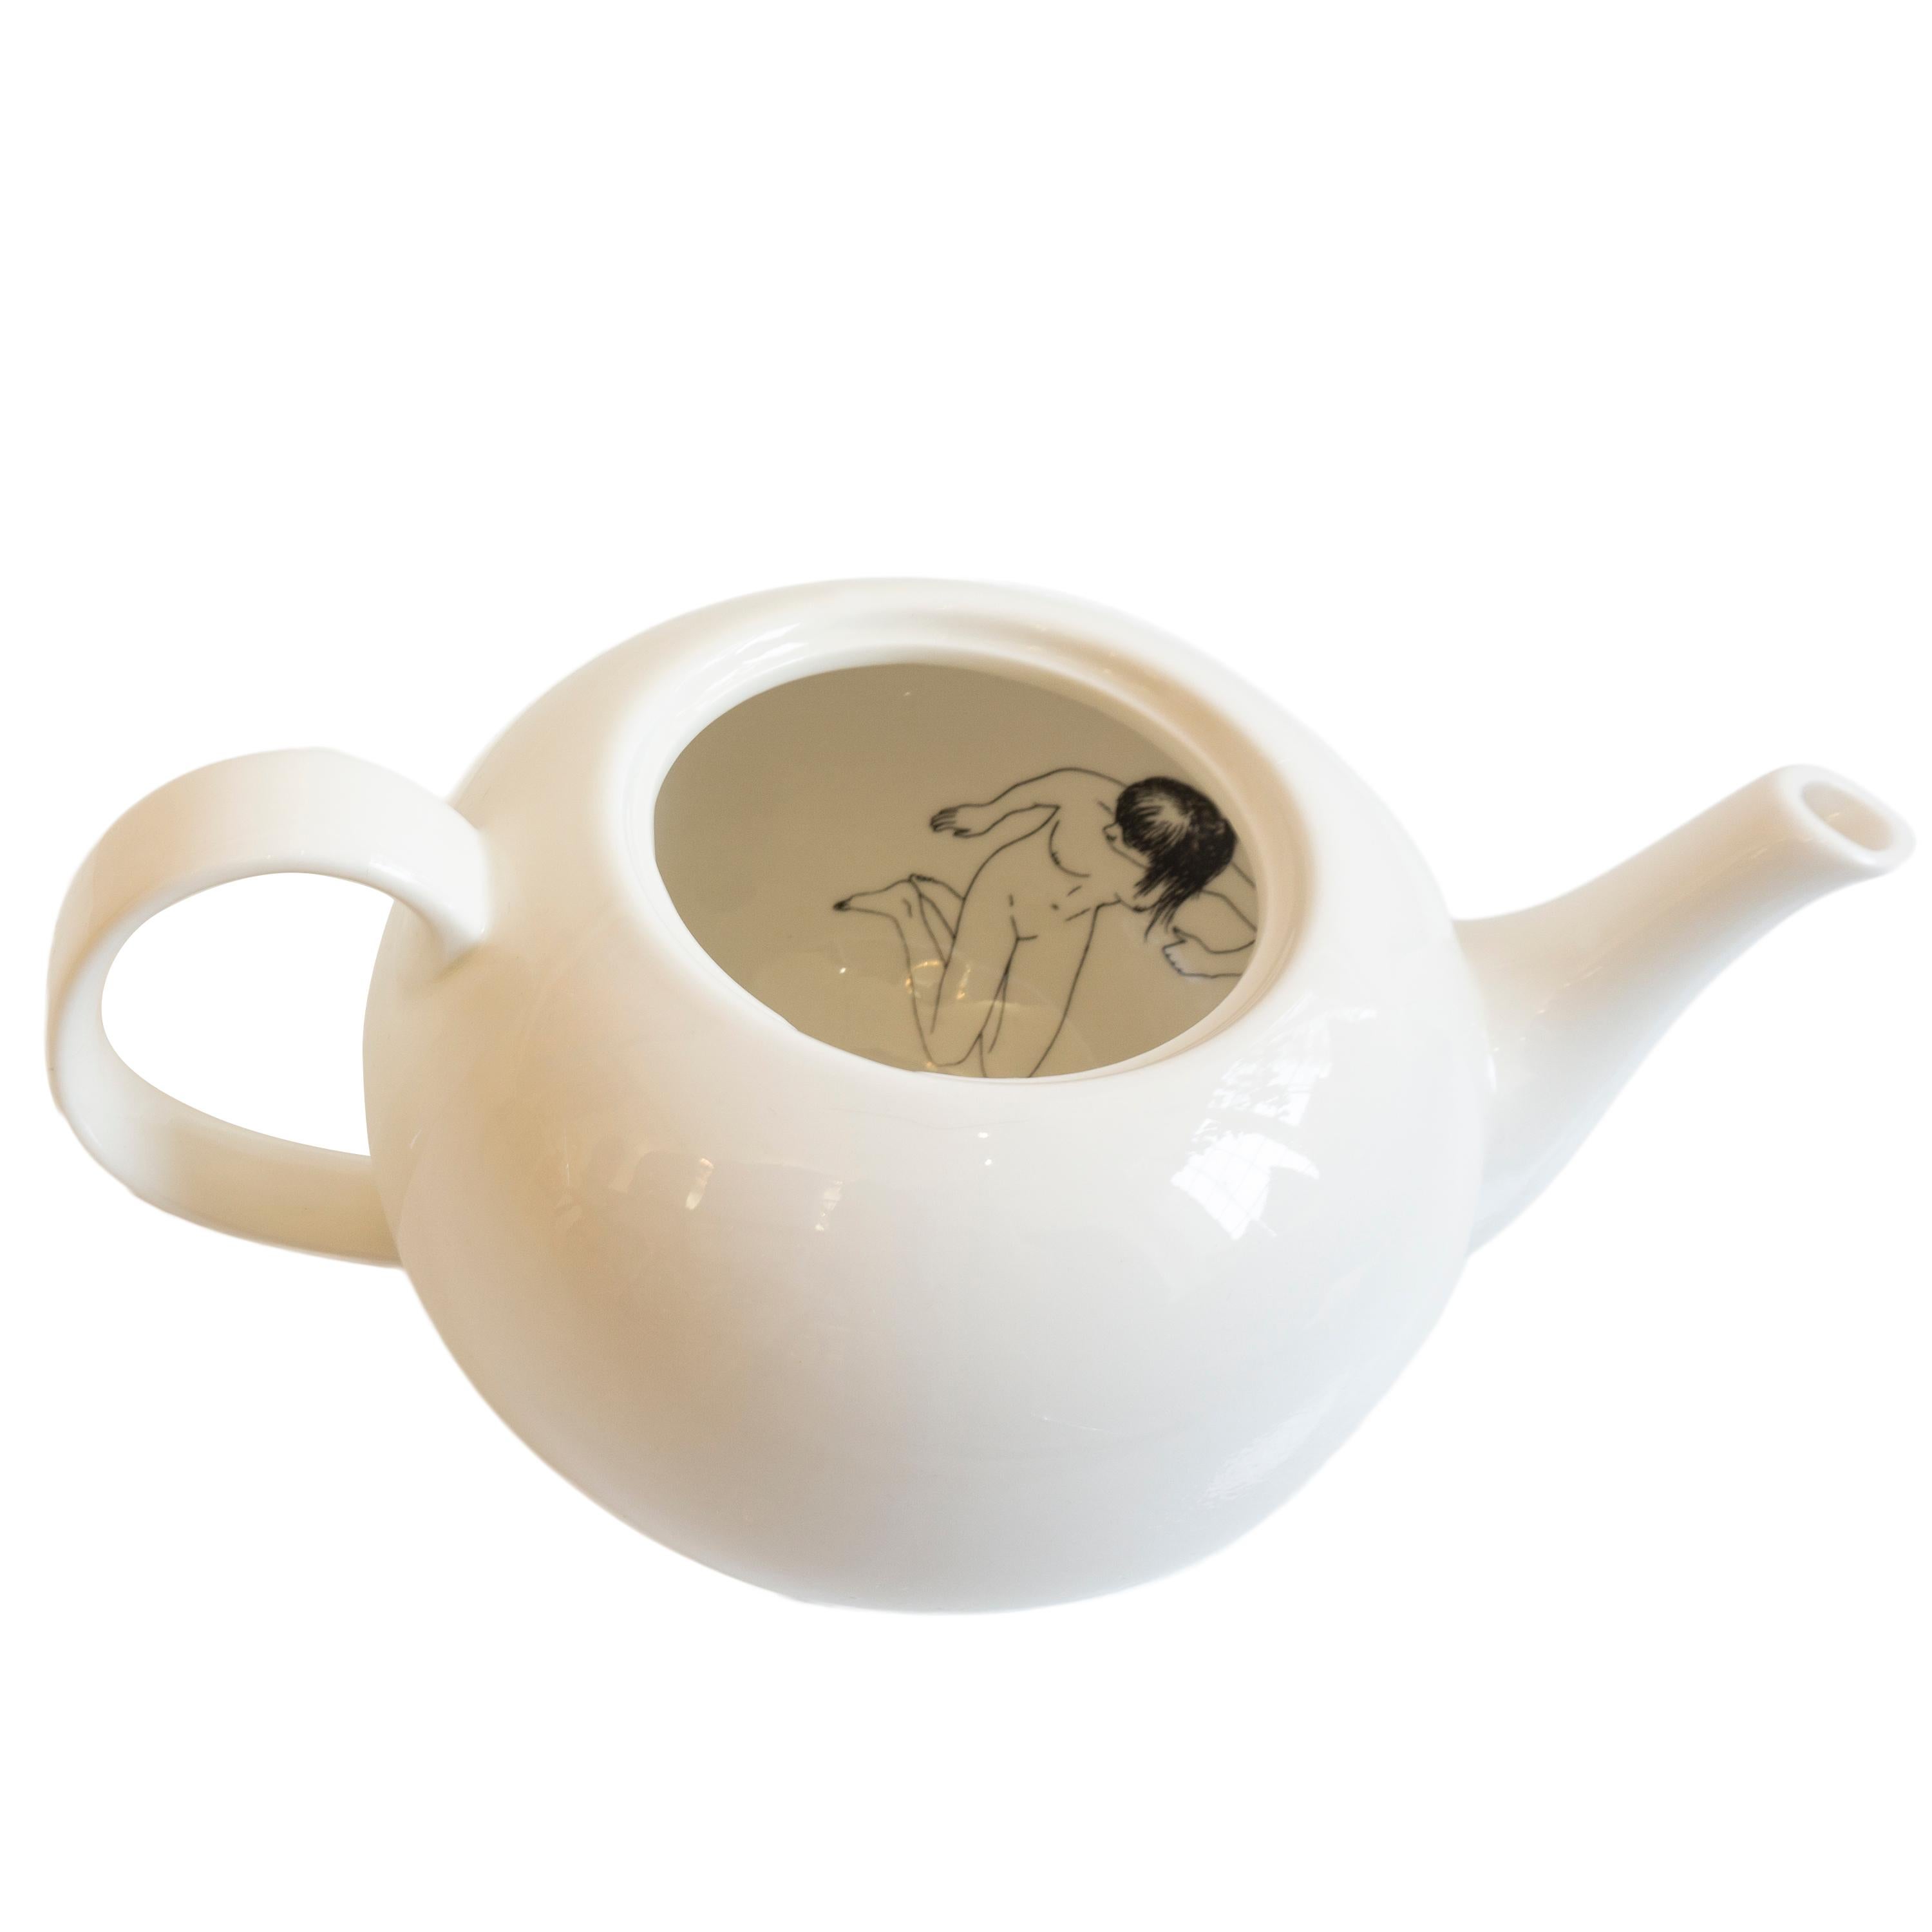 Glazed Porcelain Tea Pot with Undressed Woman For Sale